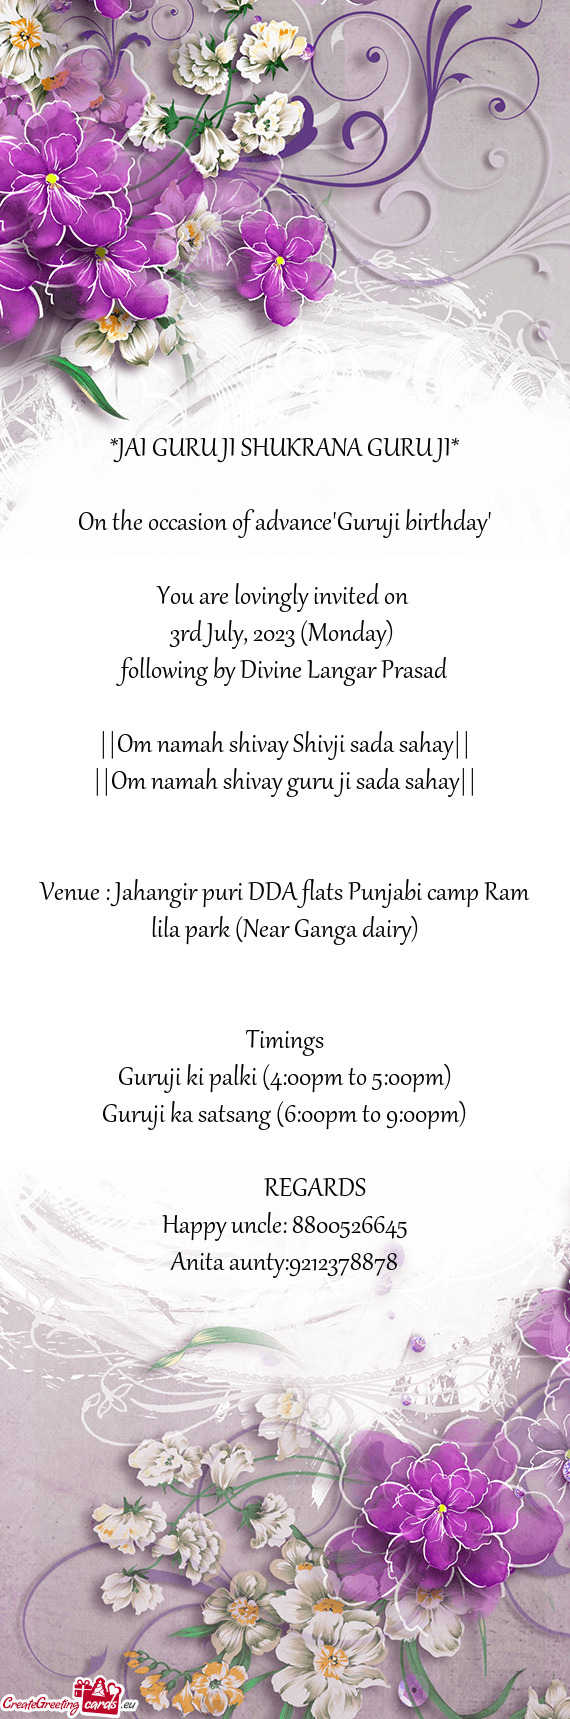 On the occasion of advance"Guruji birthday"